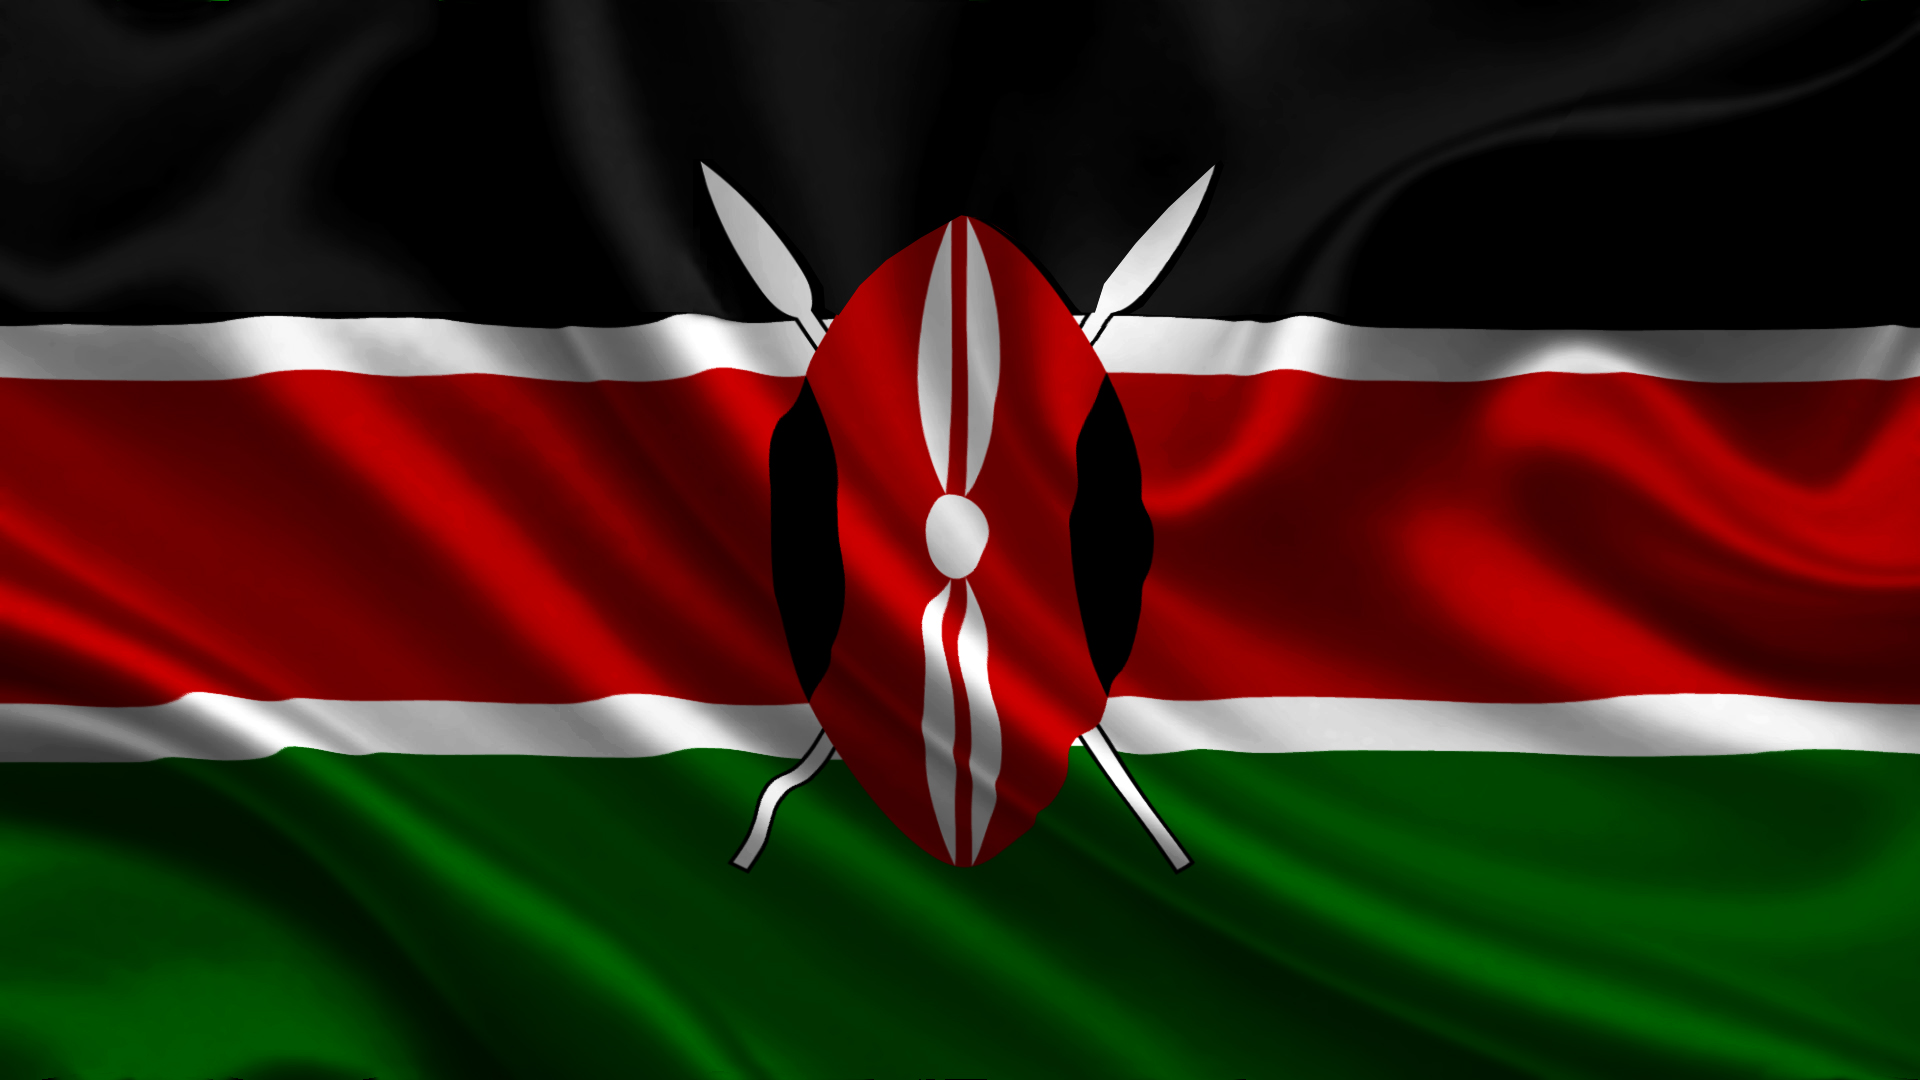 kenya flag wallpaper hd